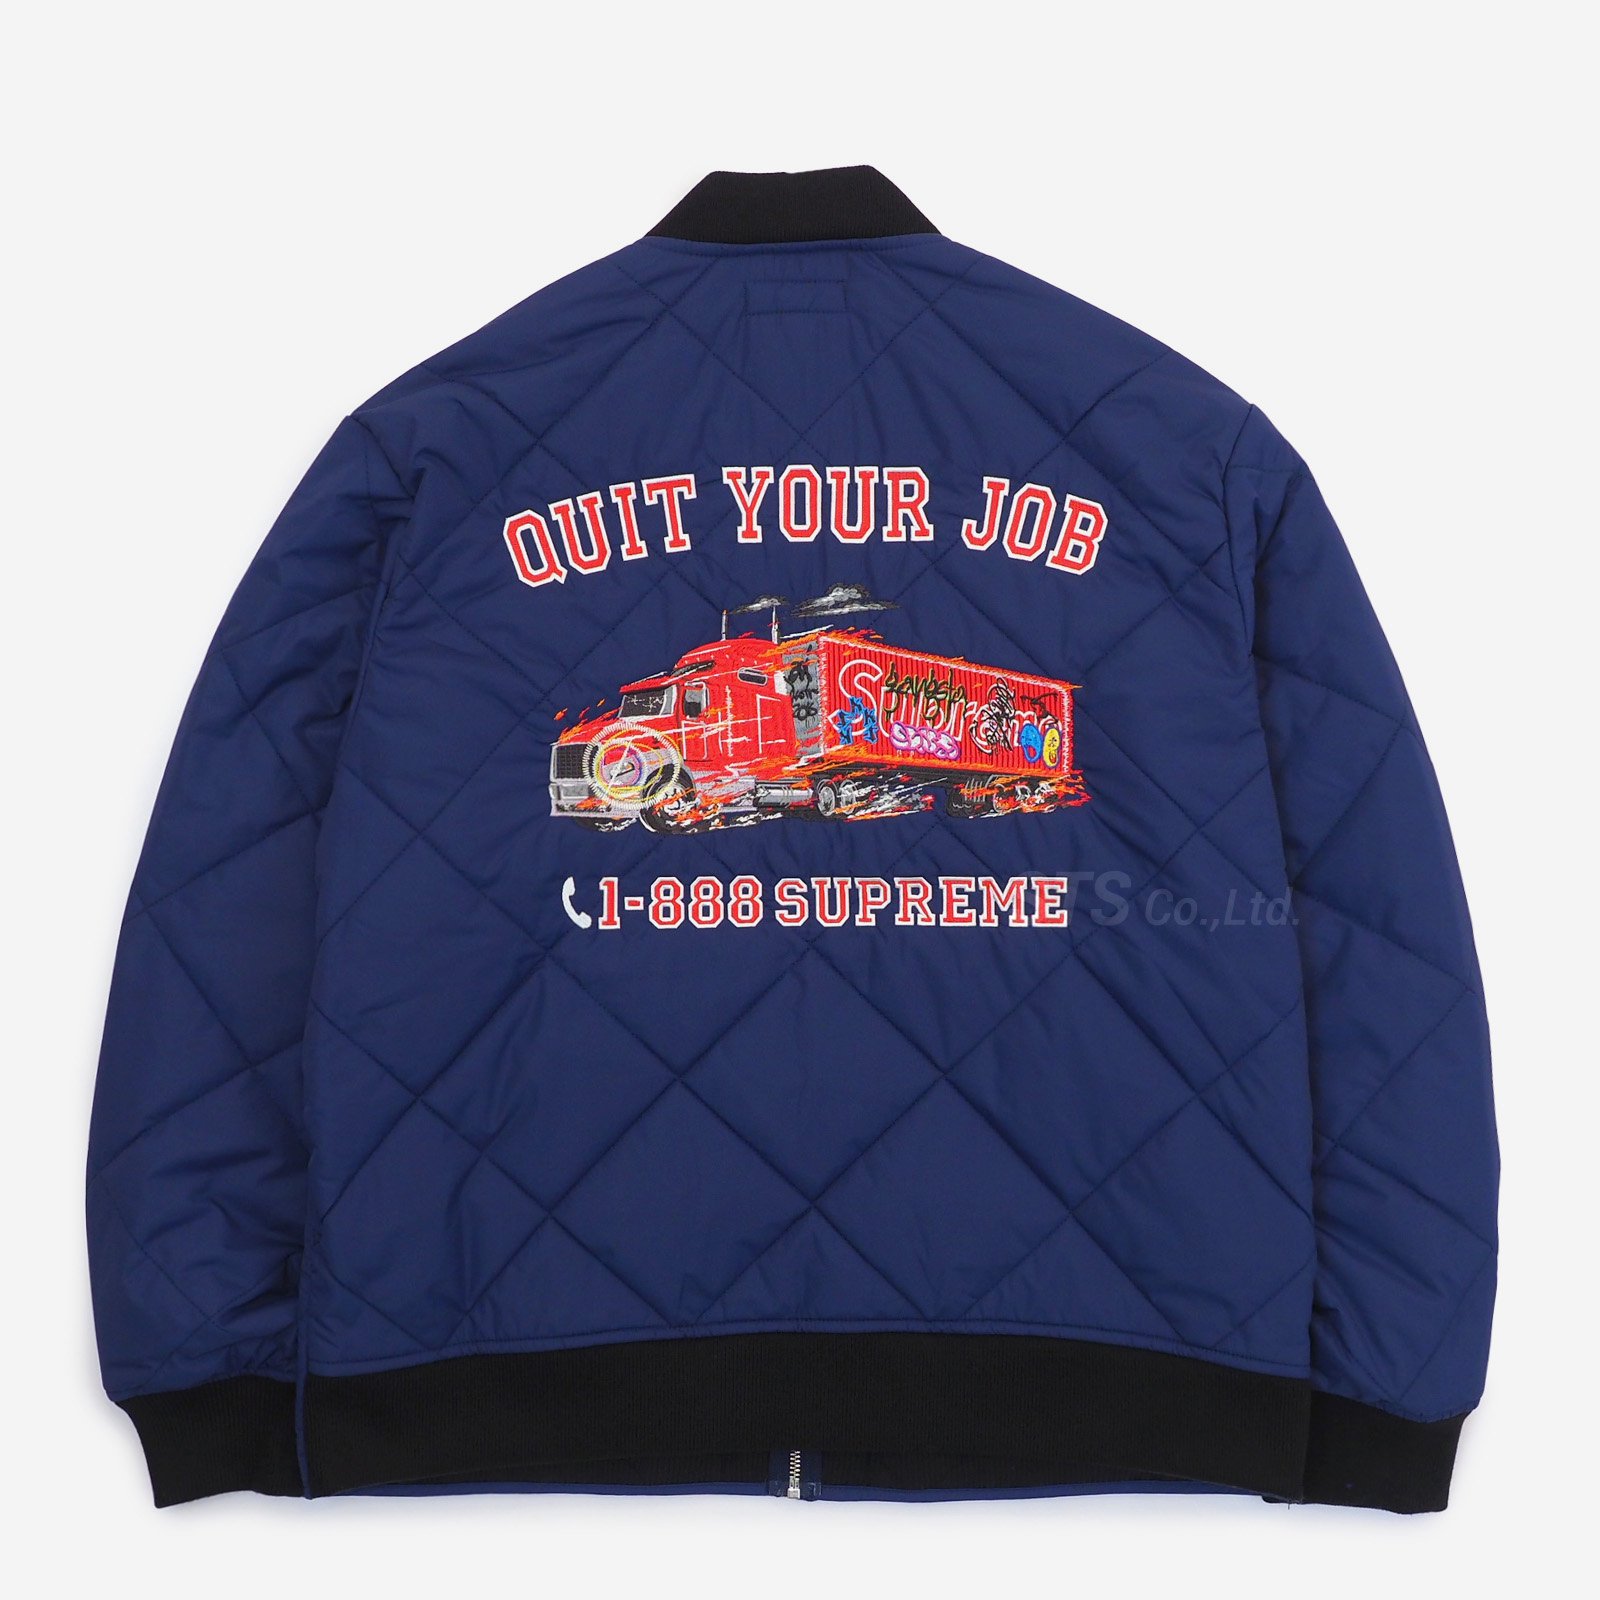 Supreme - Quit Your Job Quilted Work Jacket - UG.SHAFT